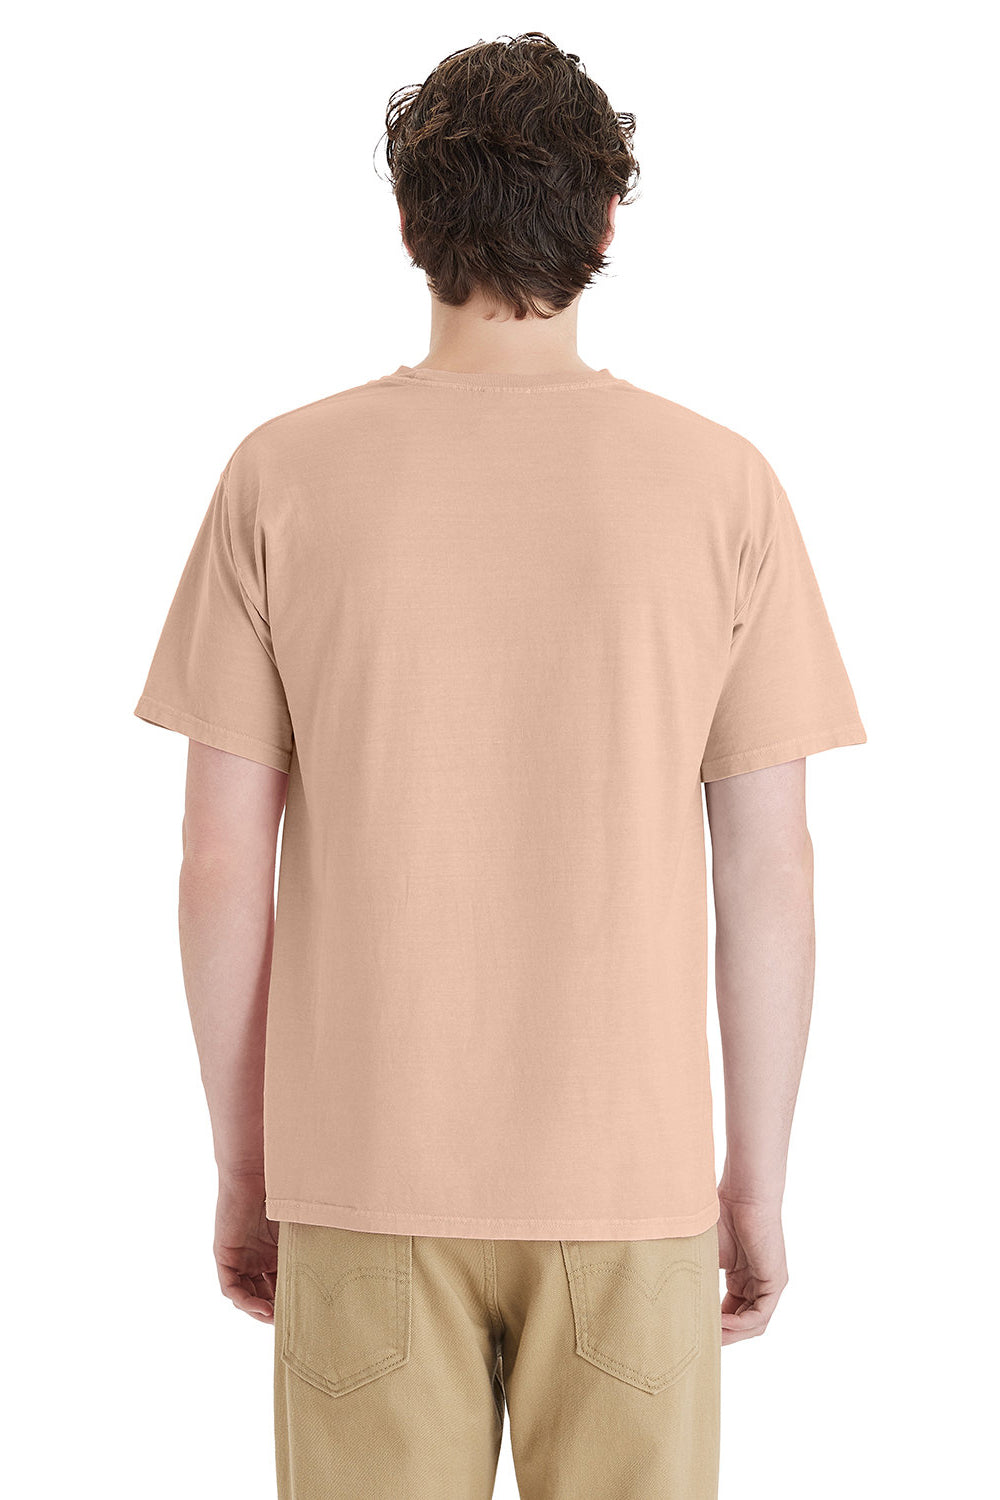 ComfortWash By Hanes GDH11B Mens Botanical Dyed Short Sleeve Crewneck T-Shirt Botanical Annatto Model Back